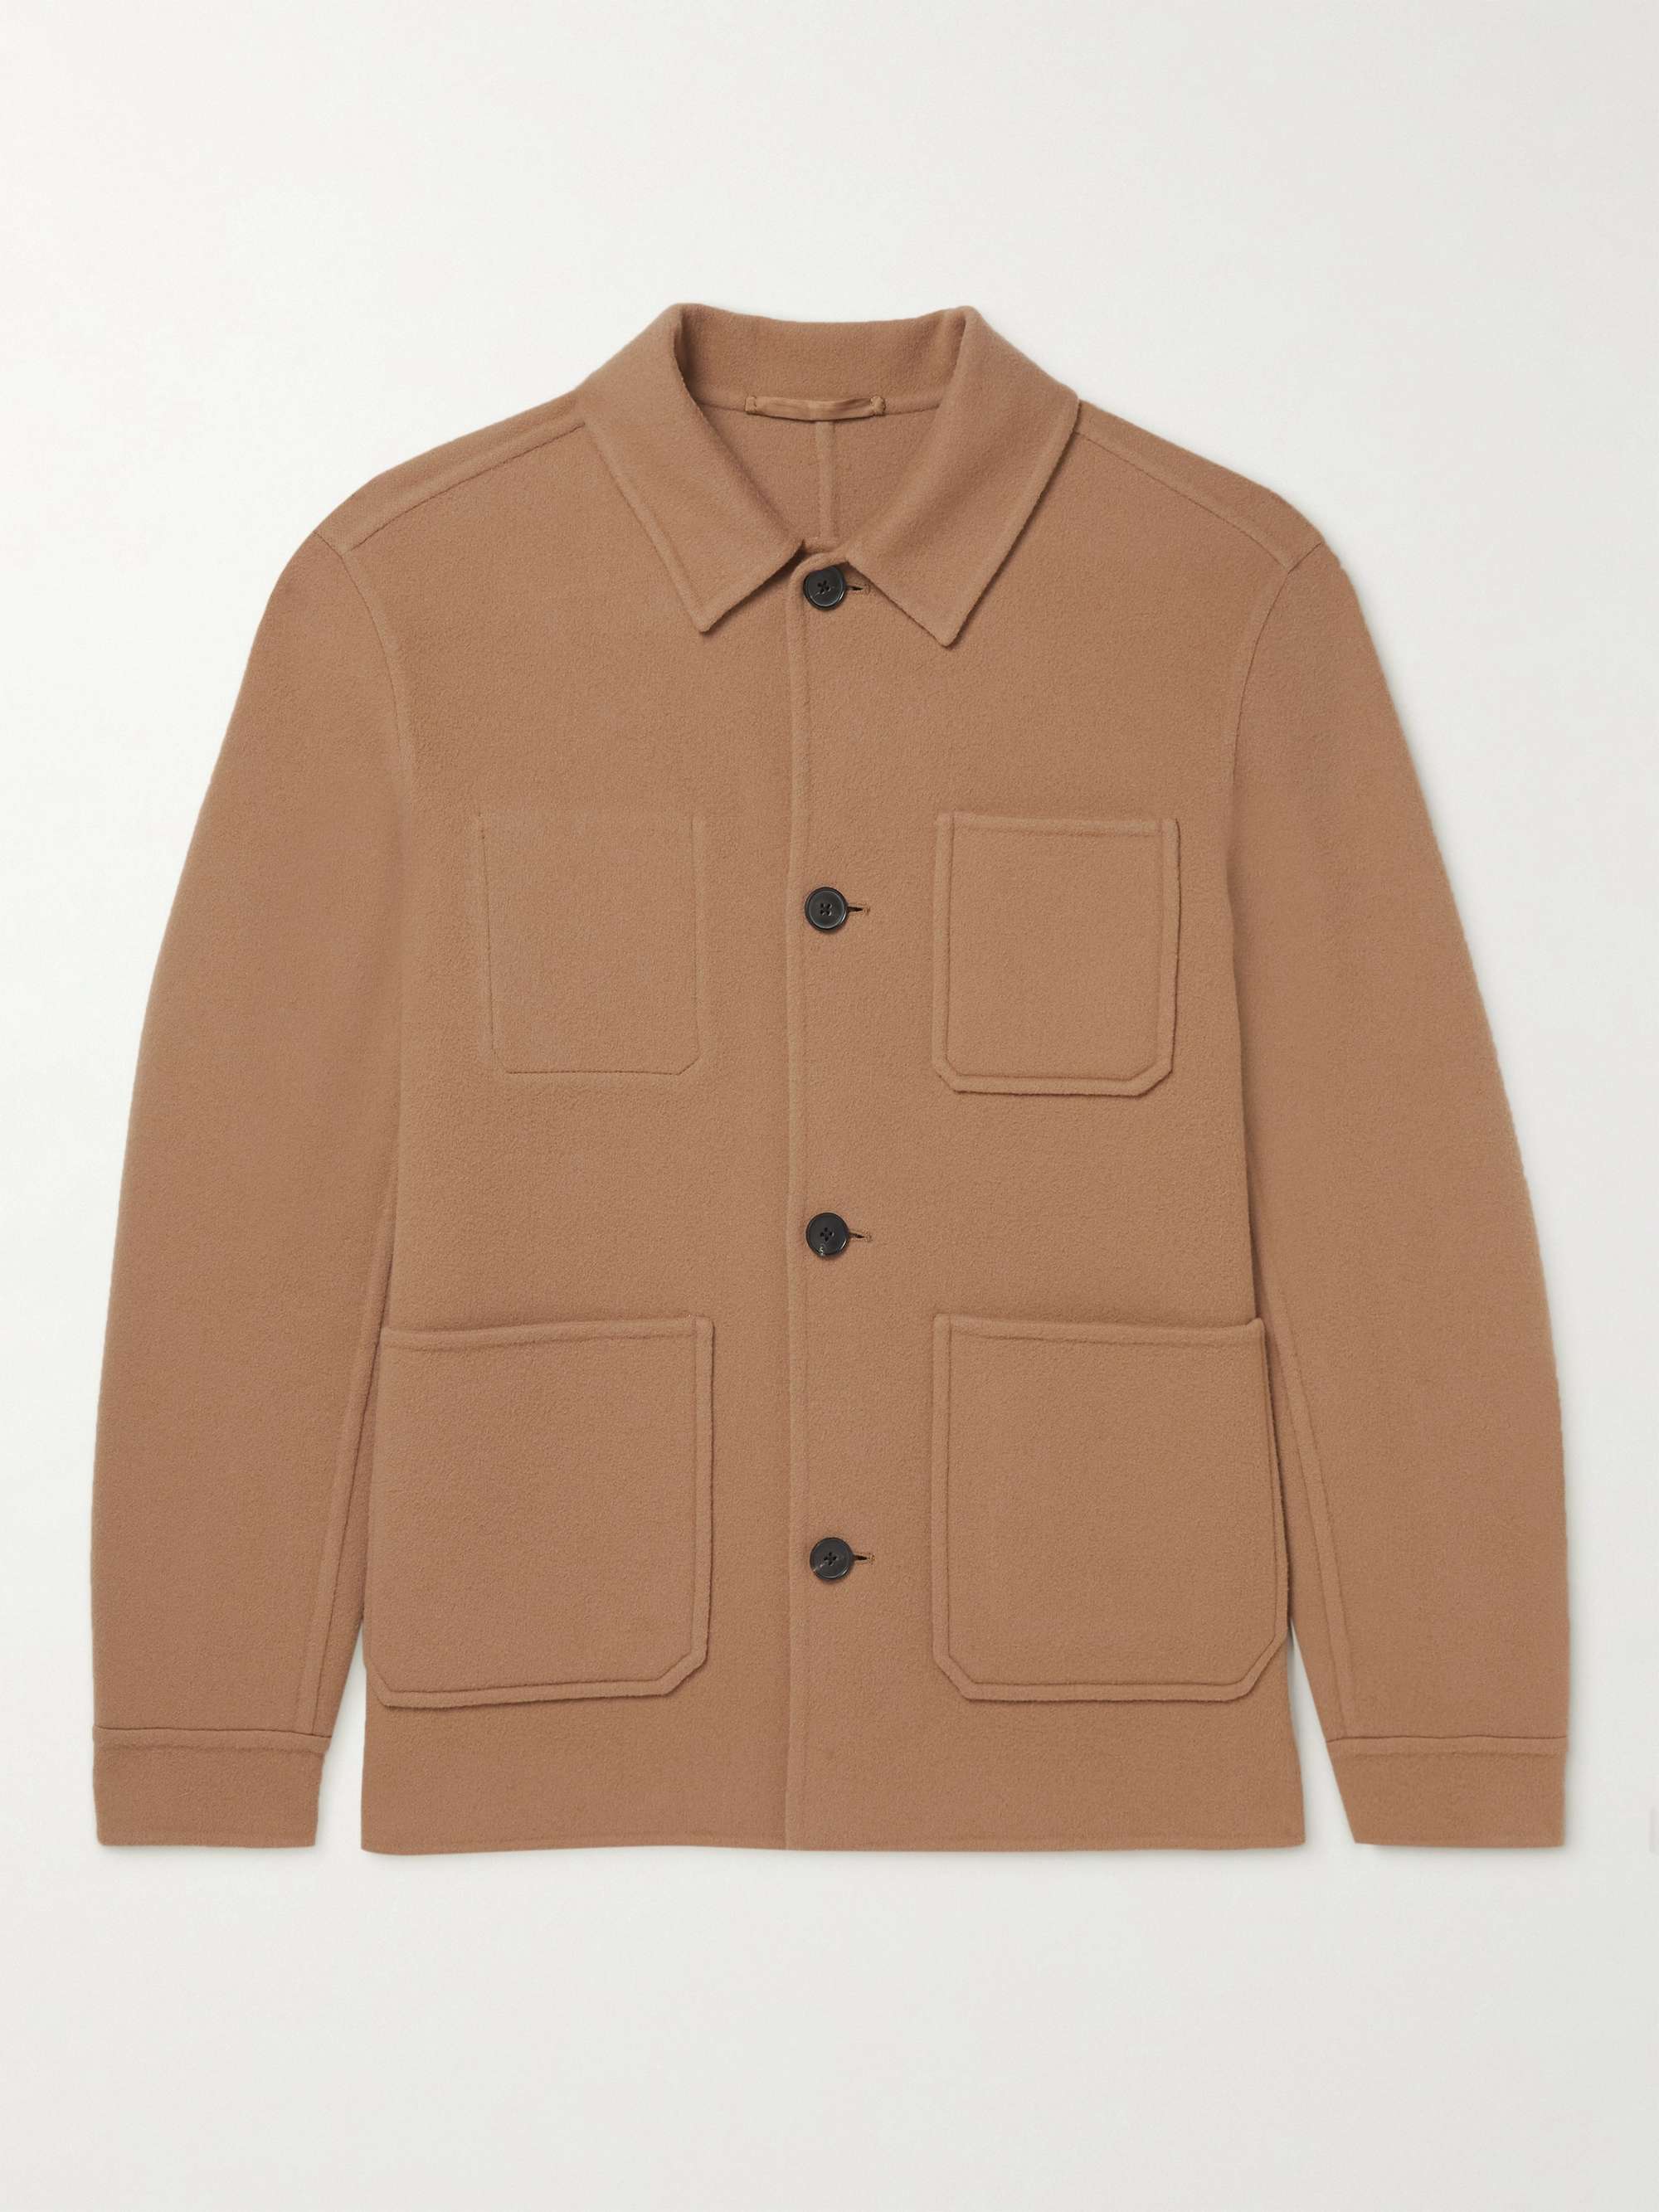 MR P. Double-Faced Splitable Wool-Blend Chore Jacket